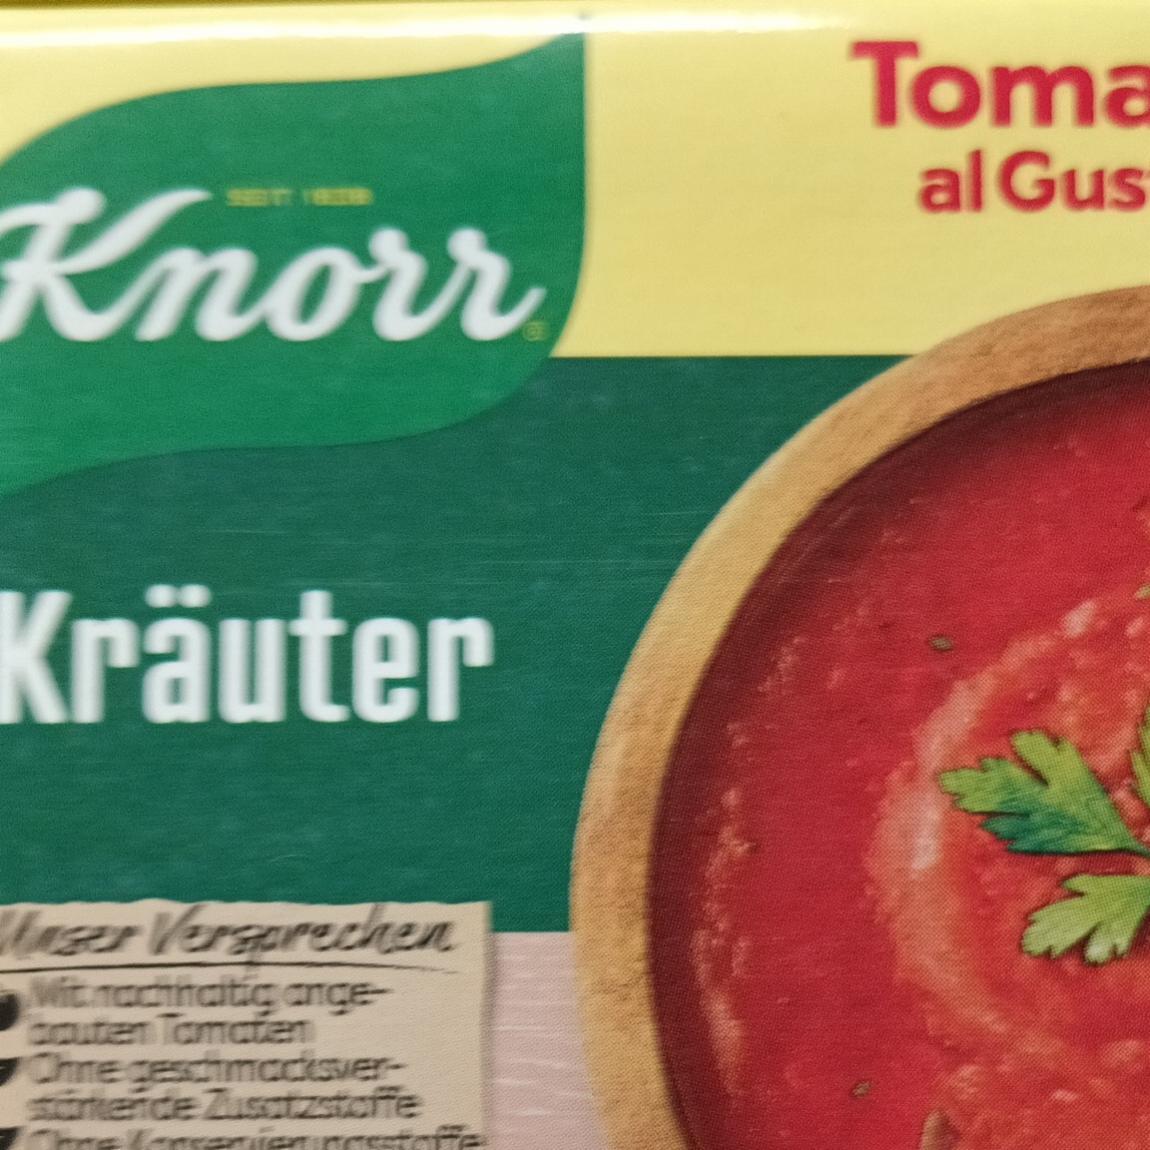 Fotografie - Kräuter Tomato al Gusto Knorr